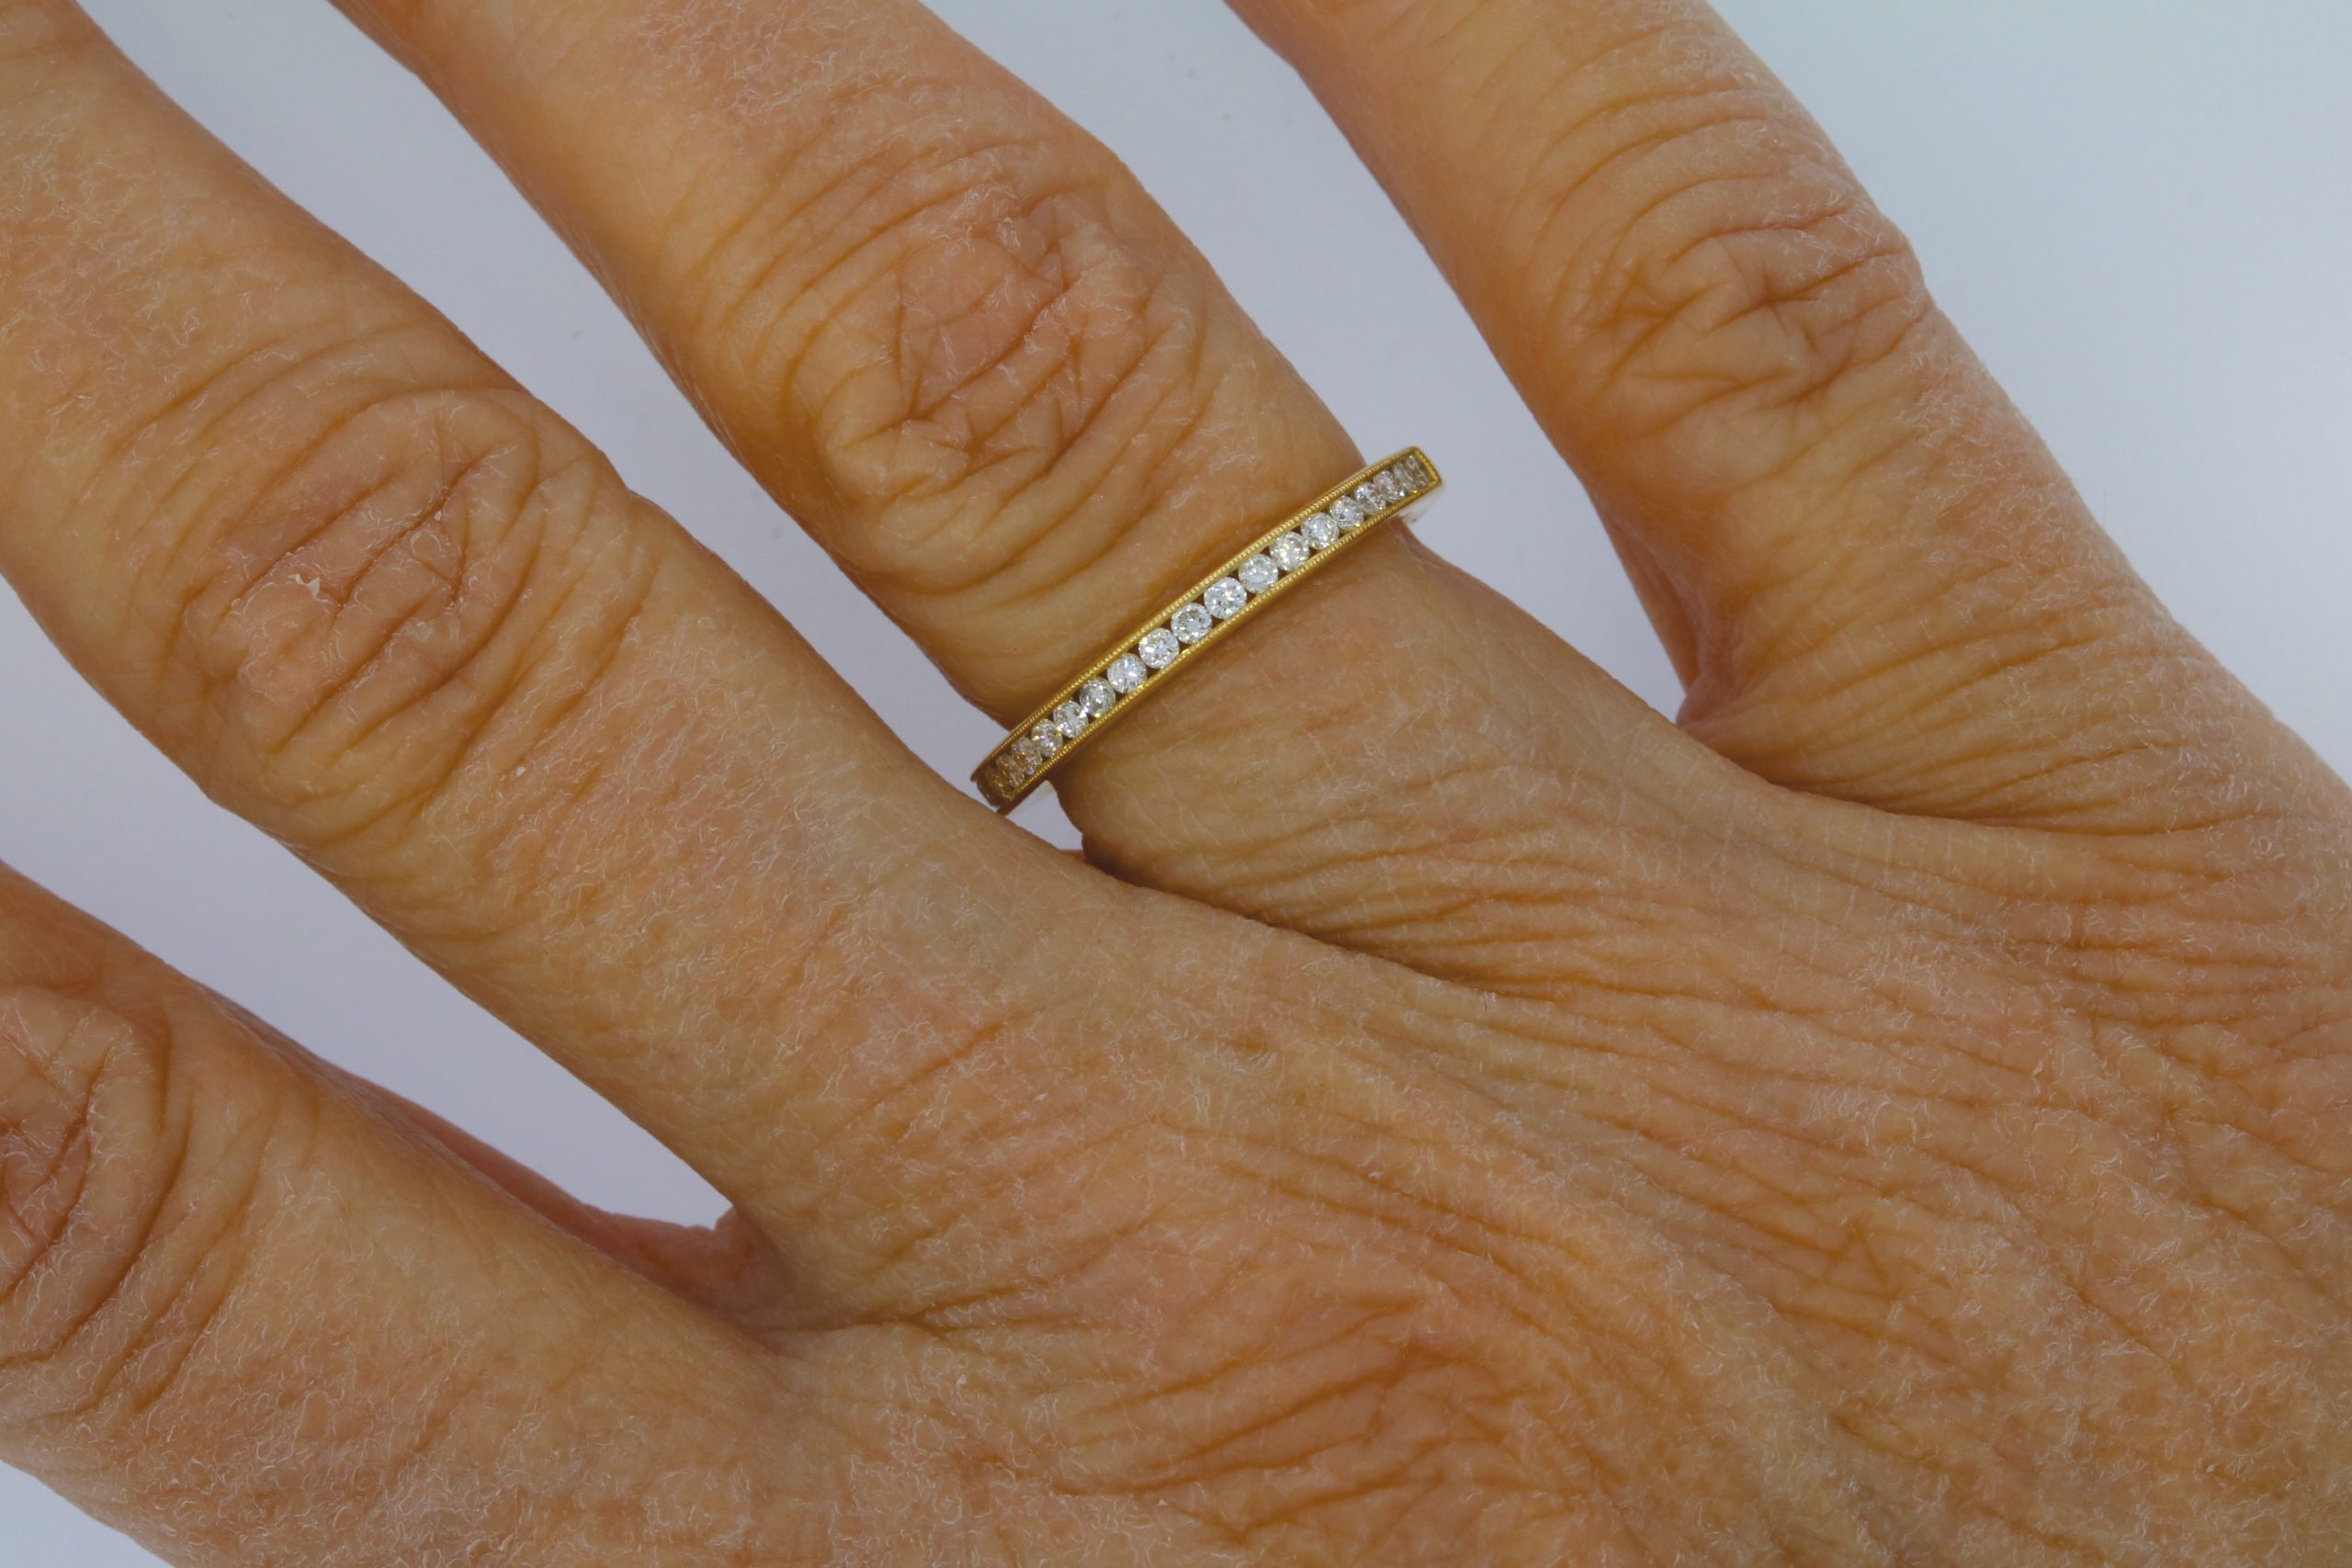 Diamond & Gold Jewellery 18ct Yellow Gold 34pts Channel Set Diamond Half Hoop Eternity Ring